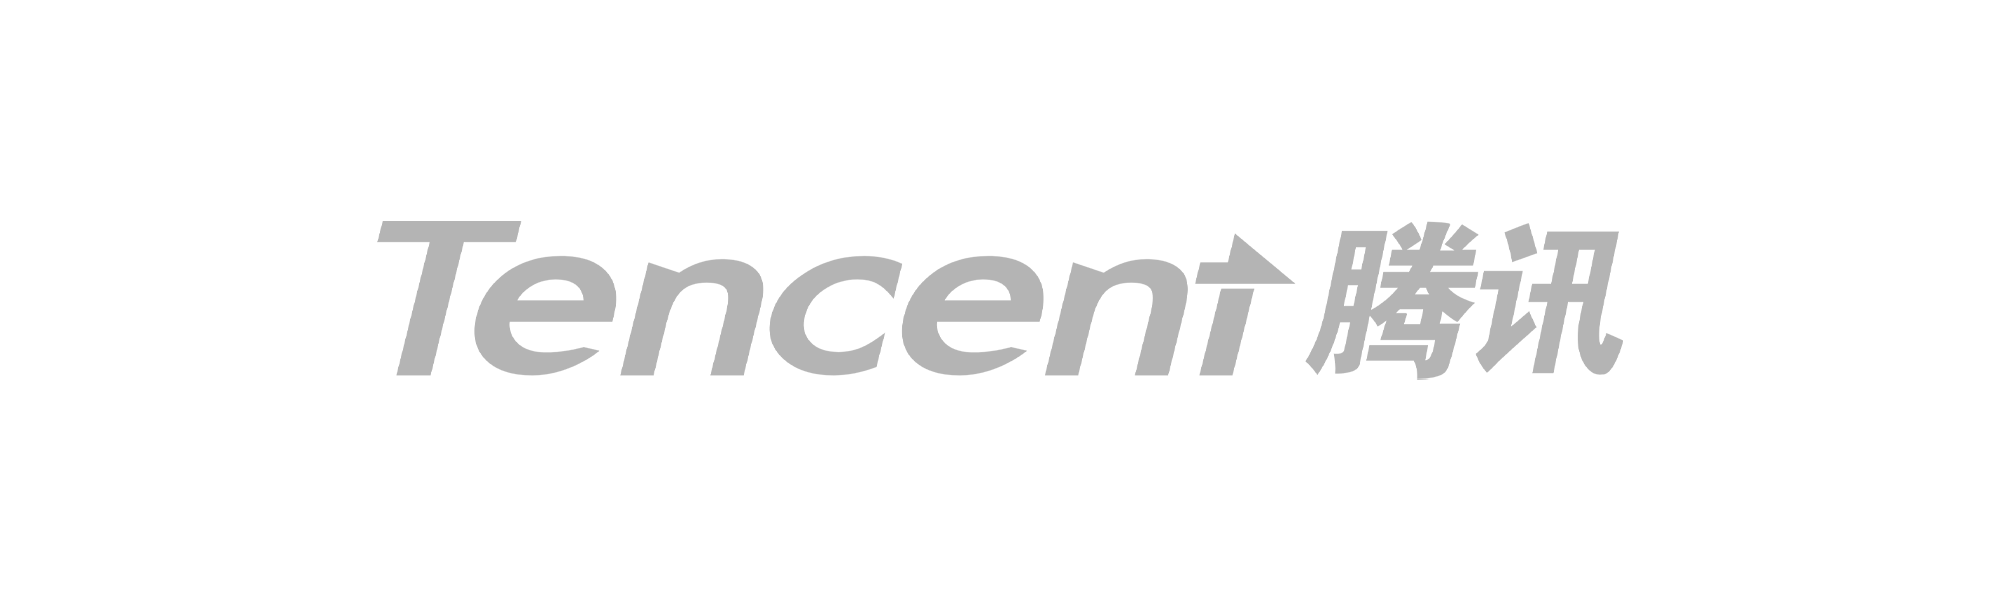 tencent.png